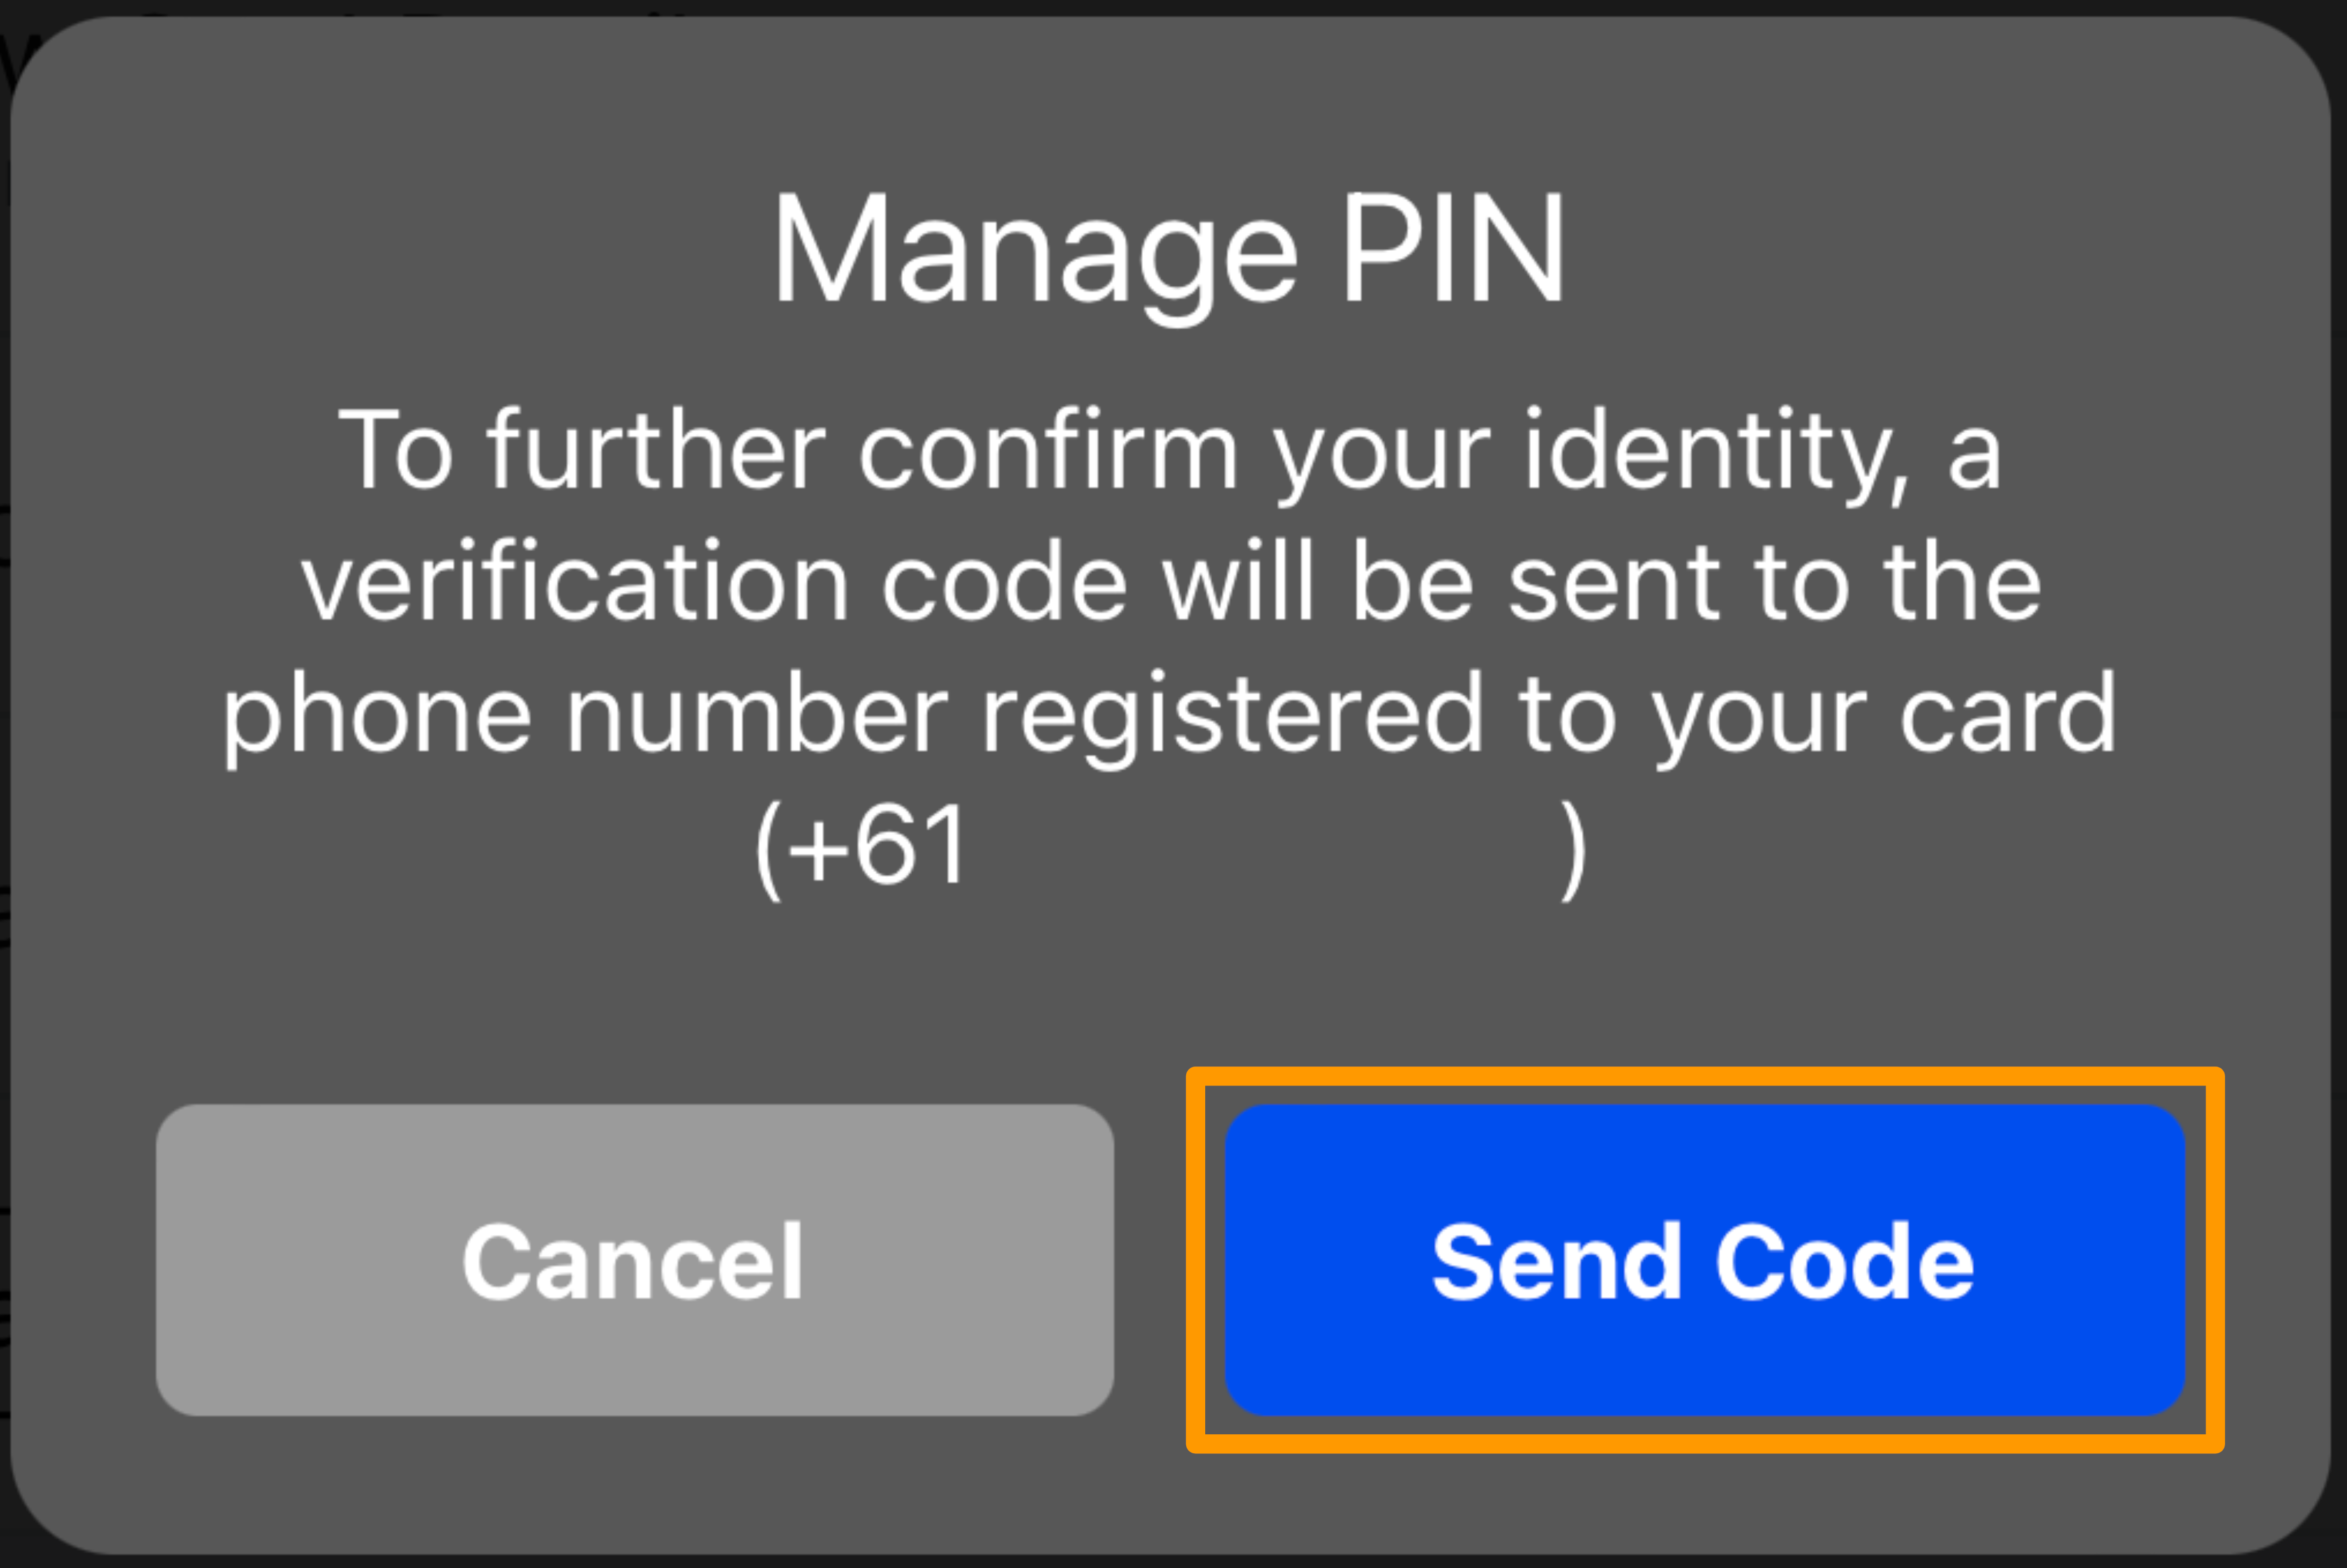 CS_Card_-_PIN_-_Send_Code.png